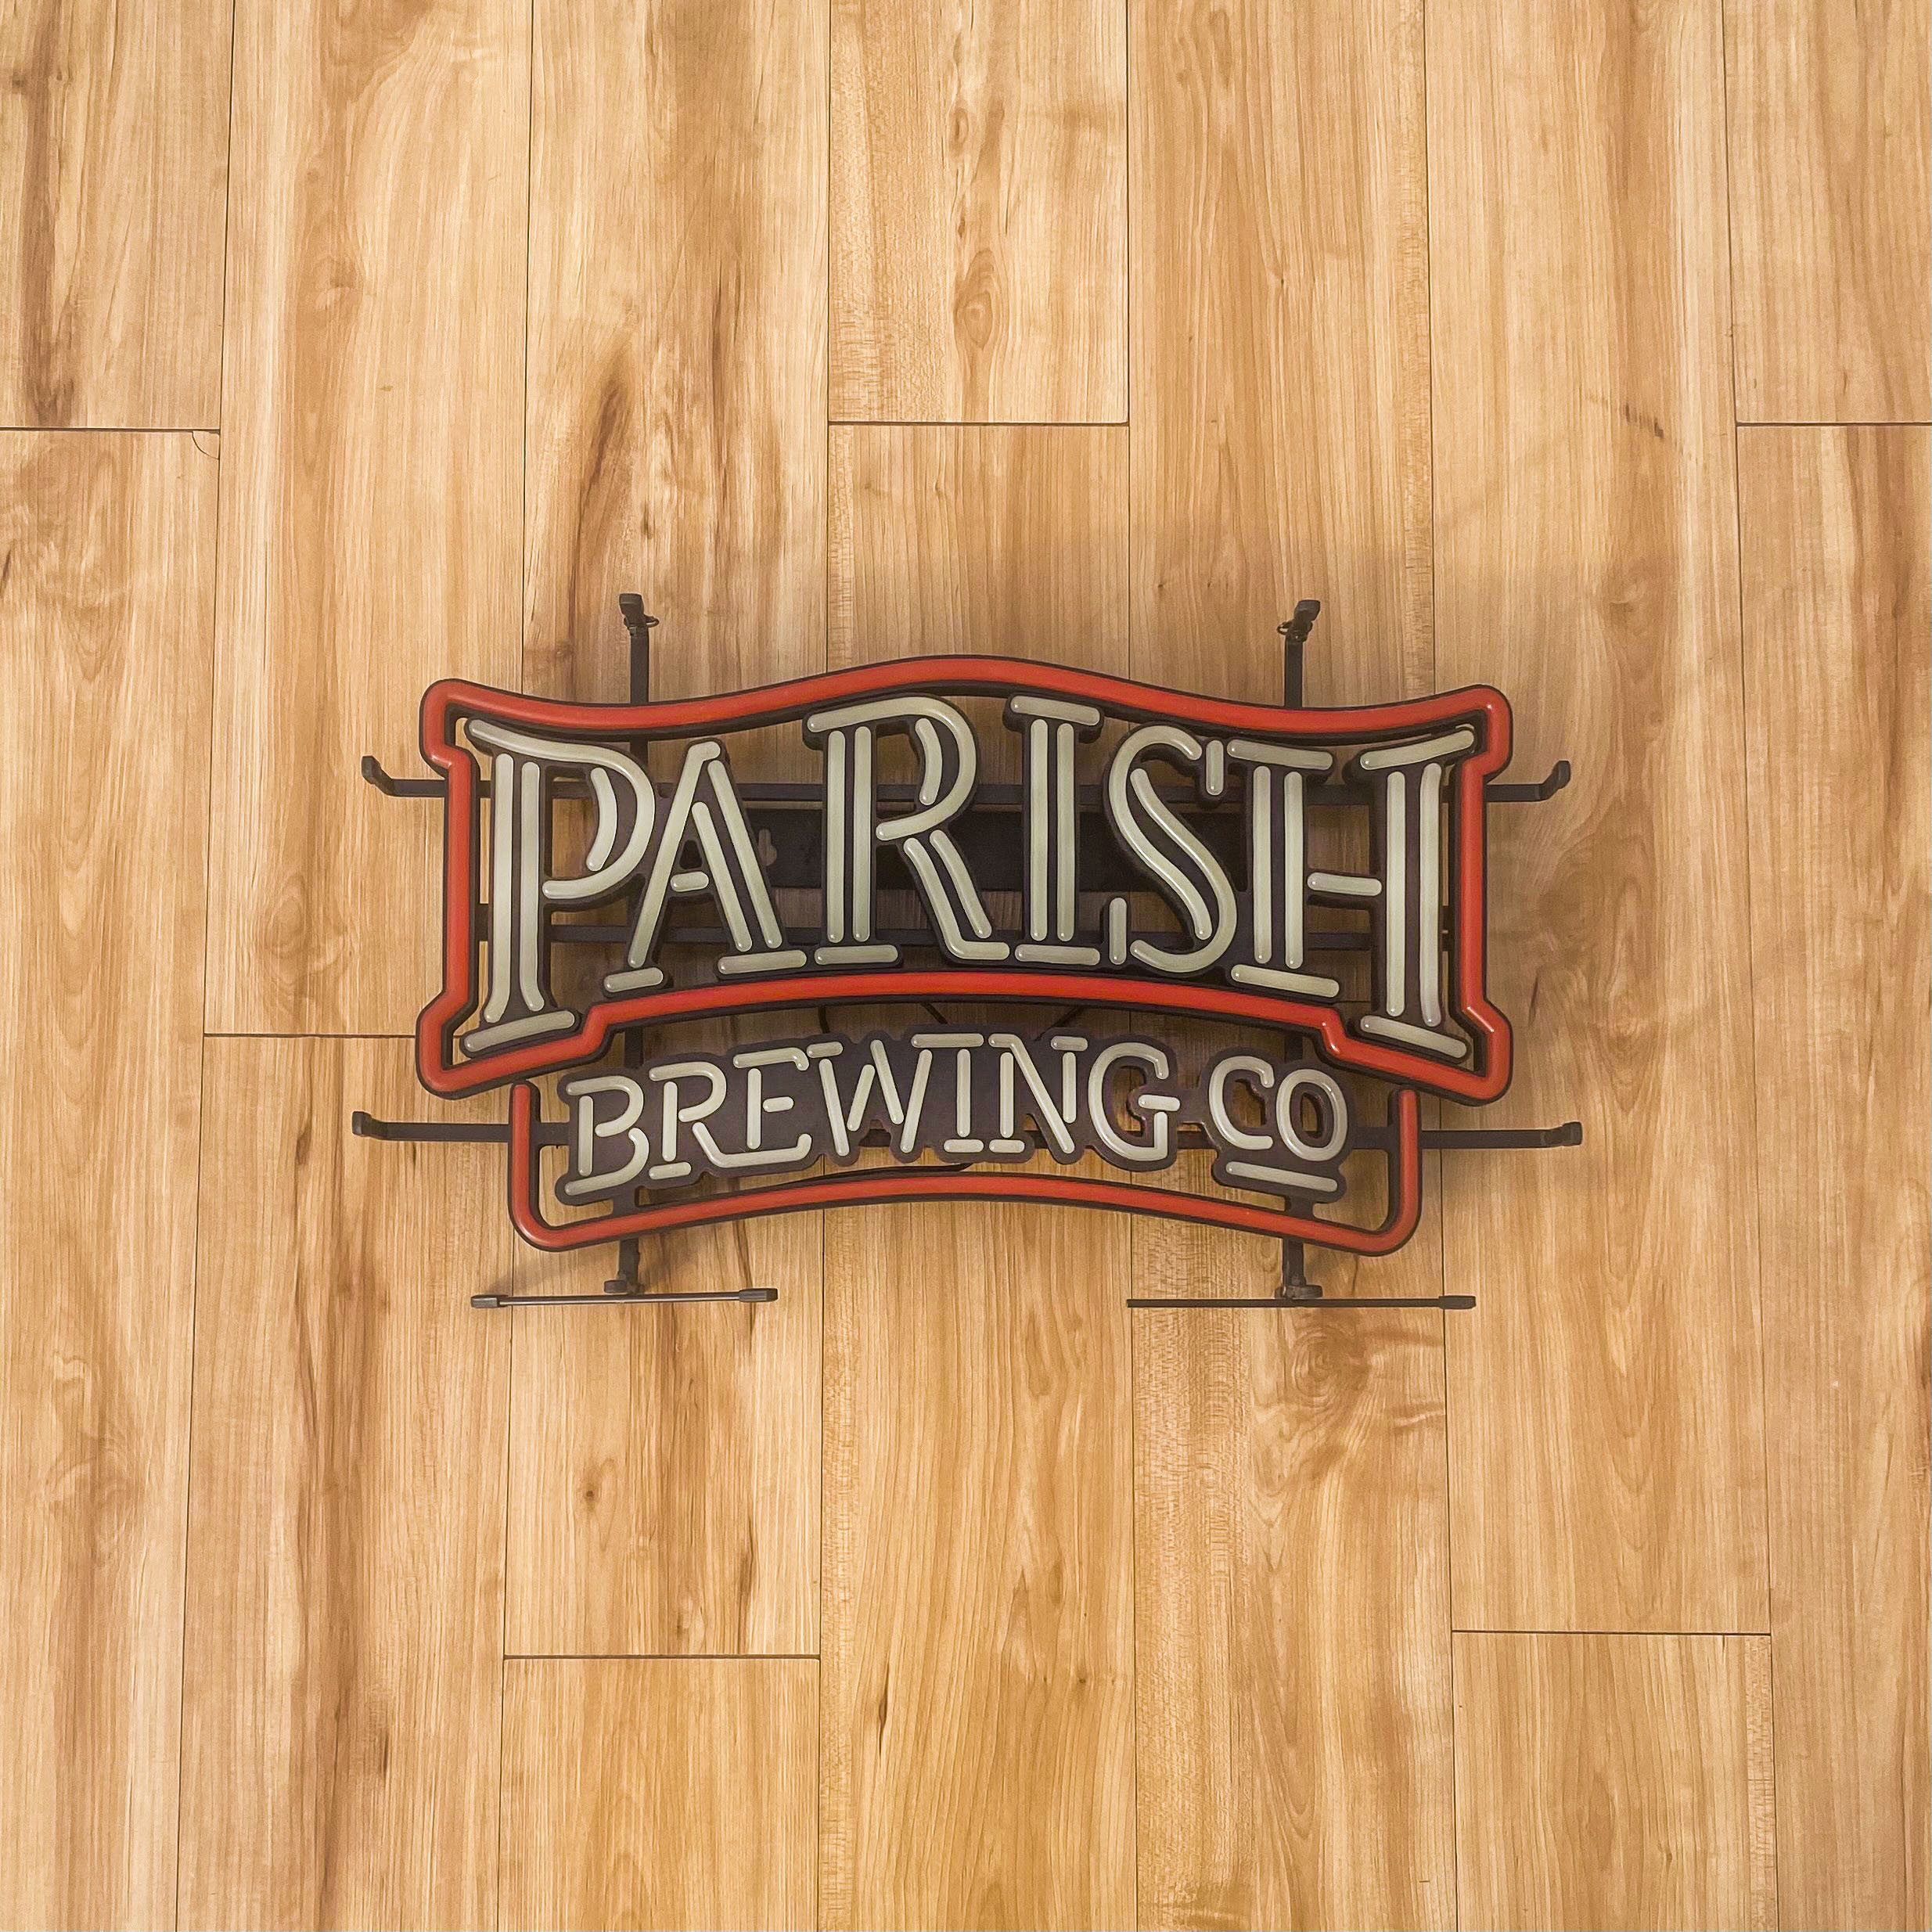 Parish Brewing Company Louisiana Logo LED Beer Sign 22x13” Brand New In Box! 